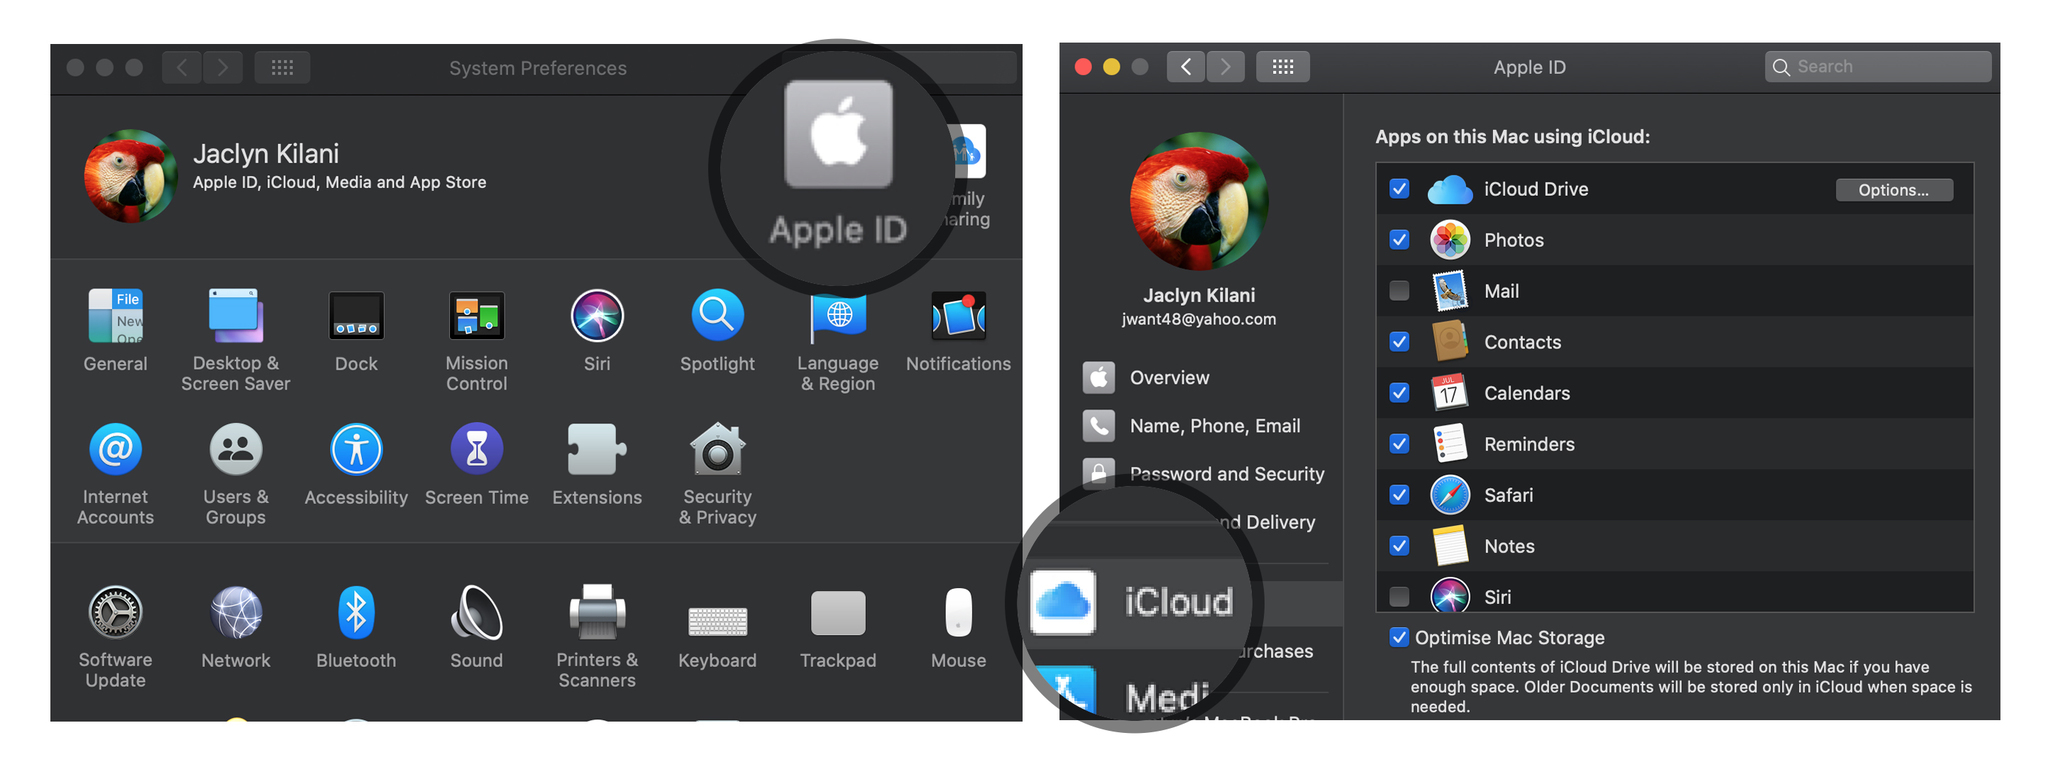 Revoke iCloud access on Mac: Click Apple ID, Click iCloud.